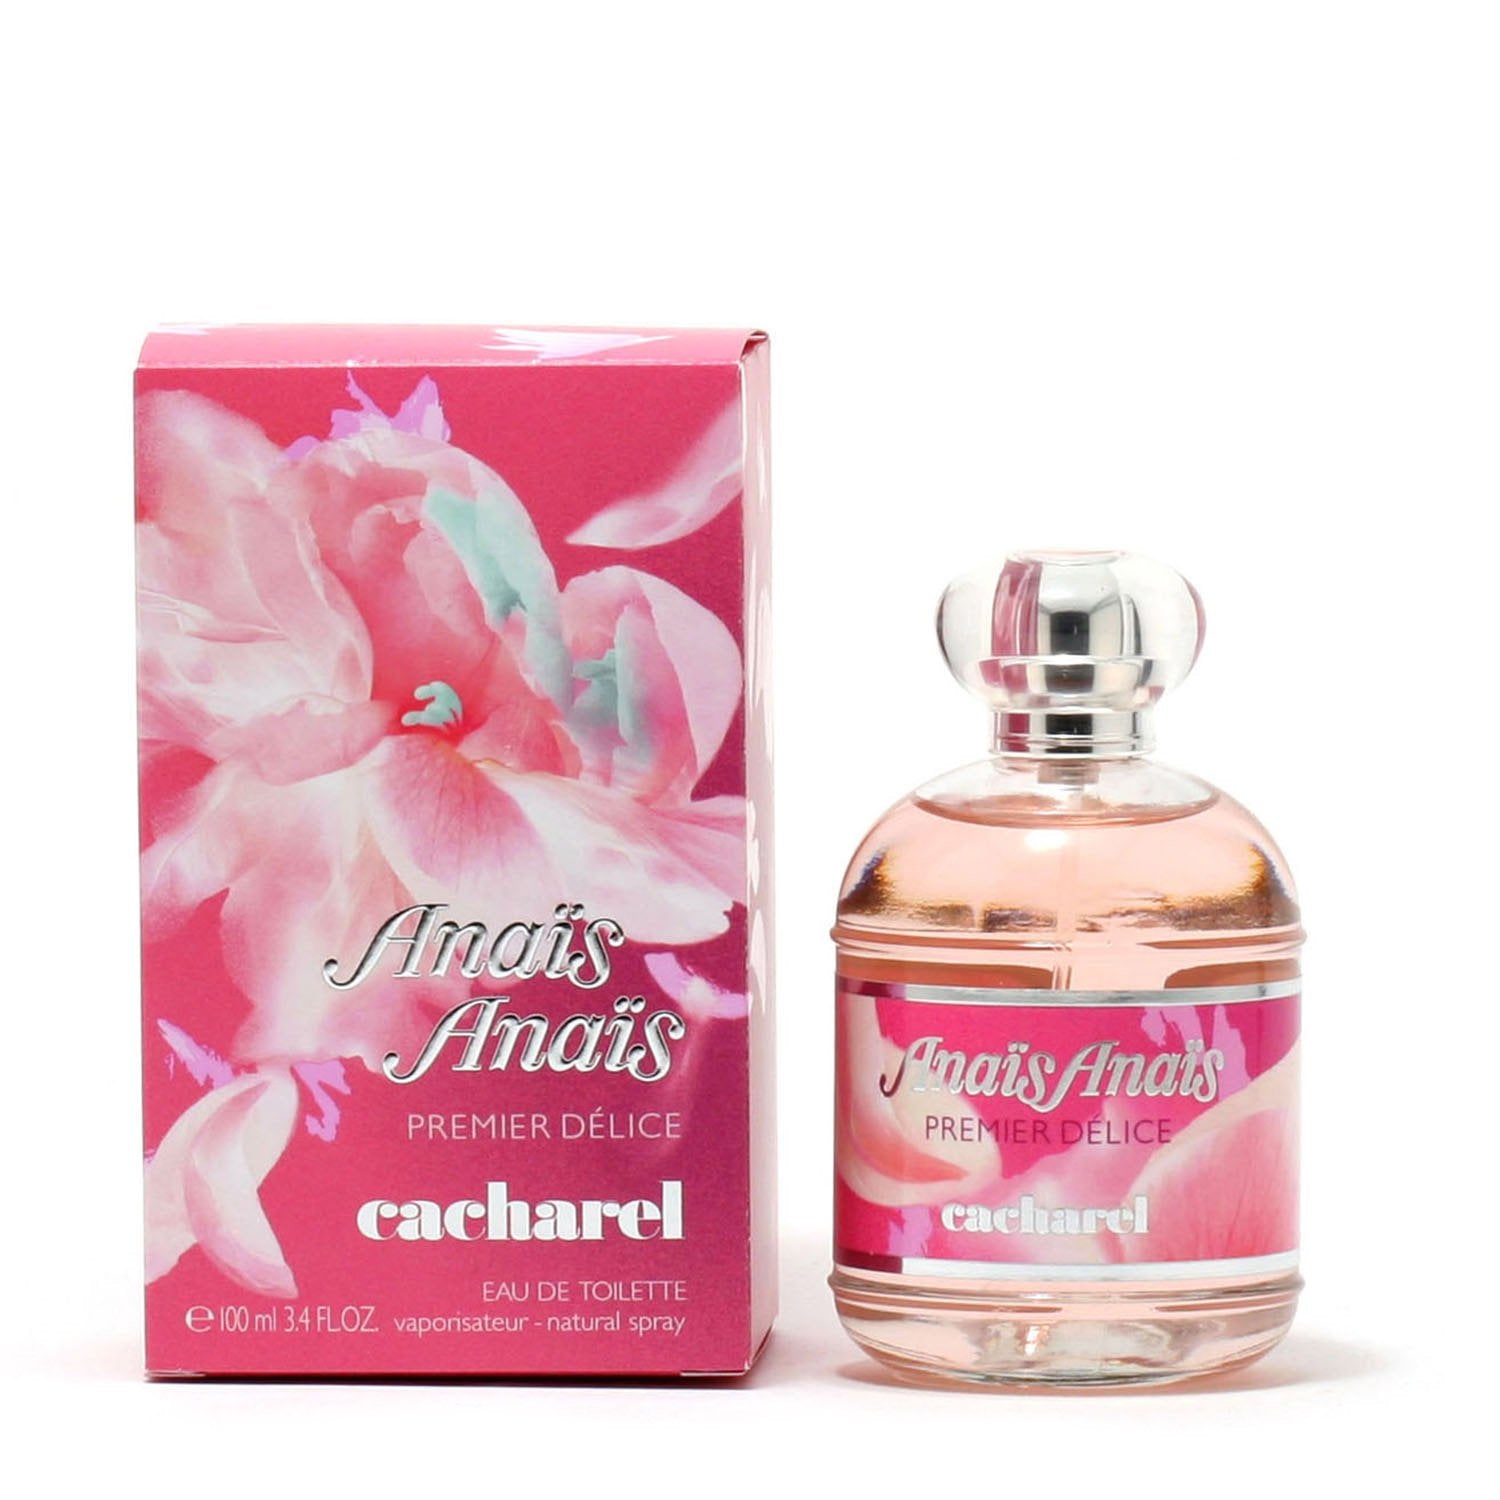 Perfume - ANAIS ANAIS PREMIER DELICE FOR WOMEN BY CACHAREL - EAU DE TOILETTE SPRAY, 3.4 OZ